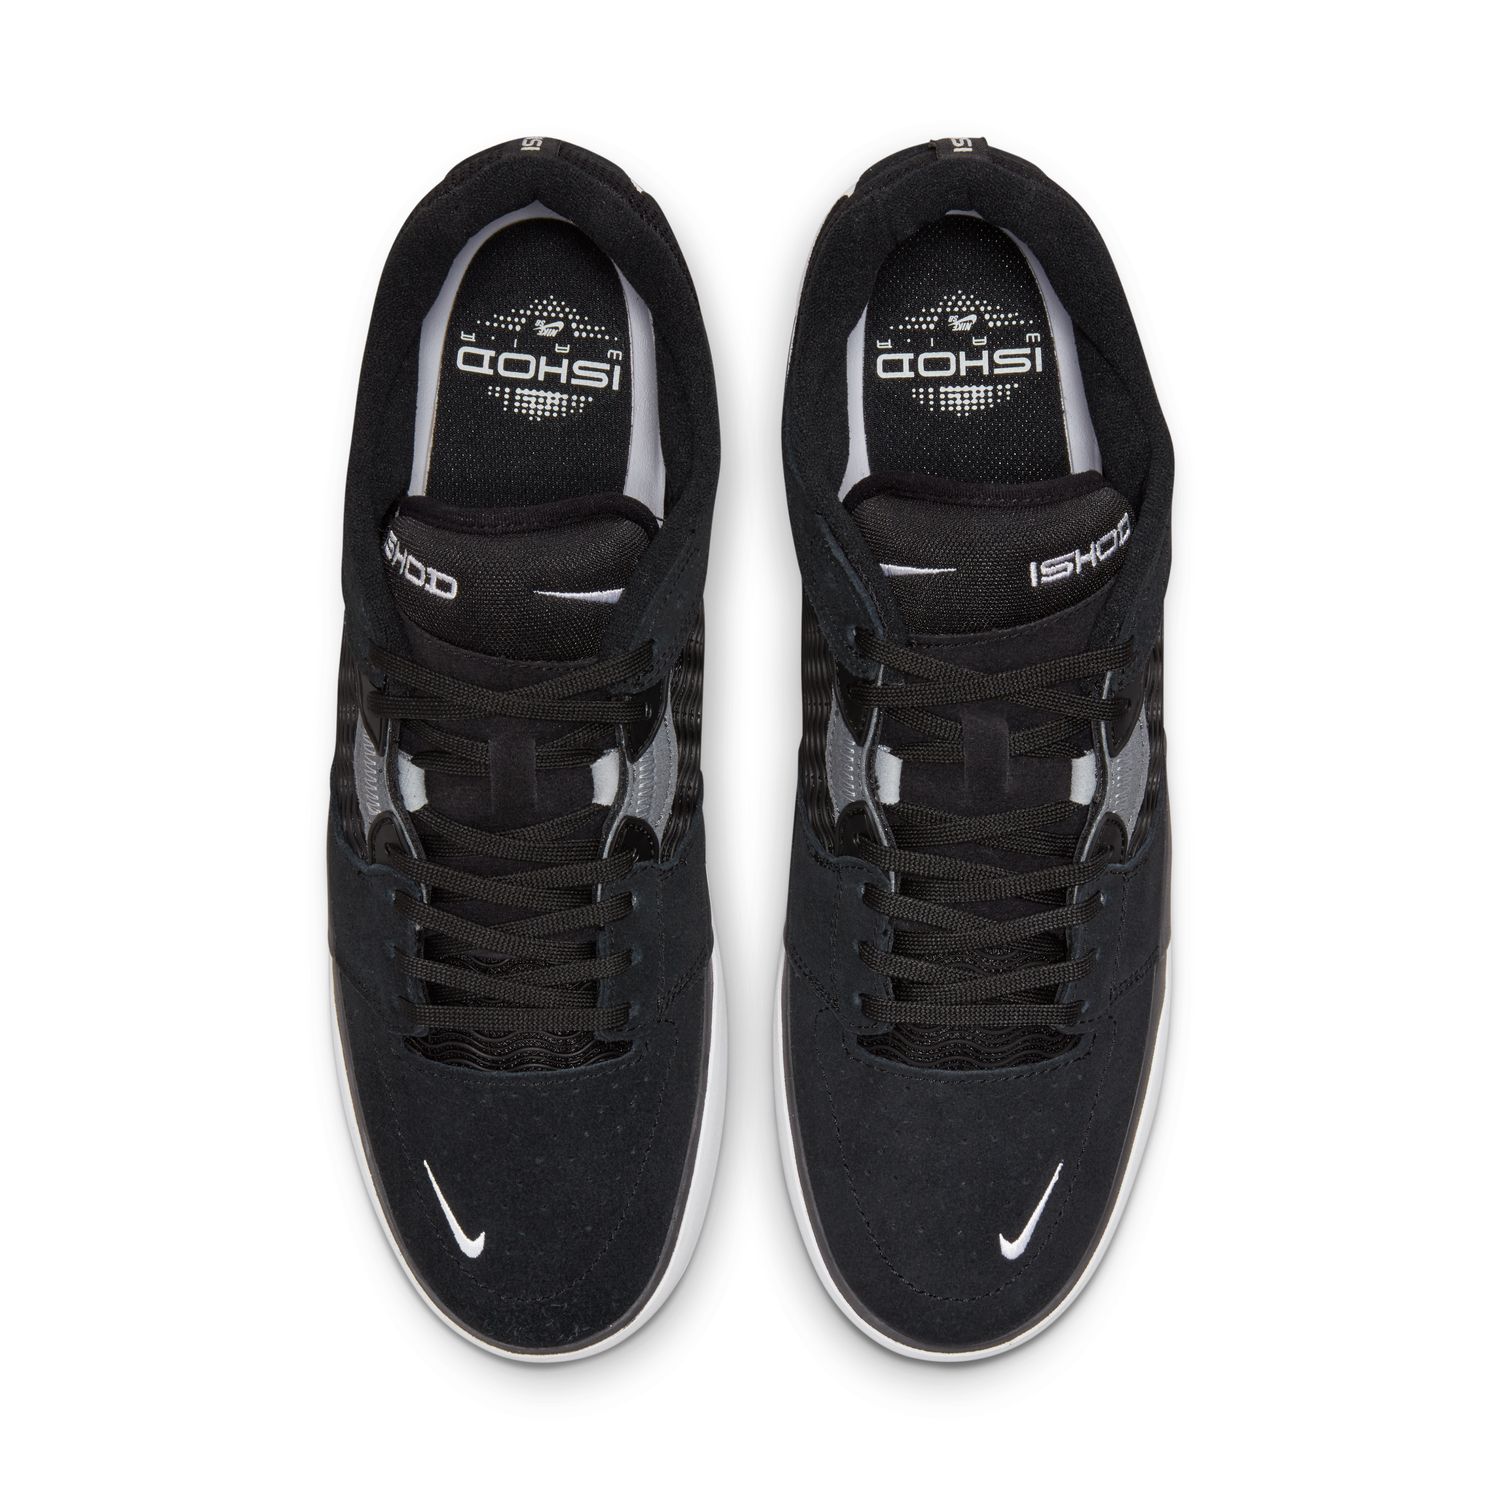 Nike SB Ishod Wair black white